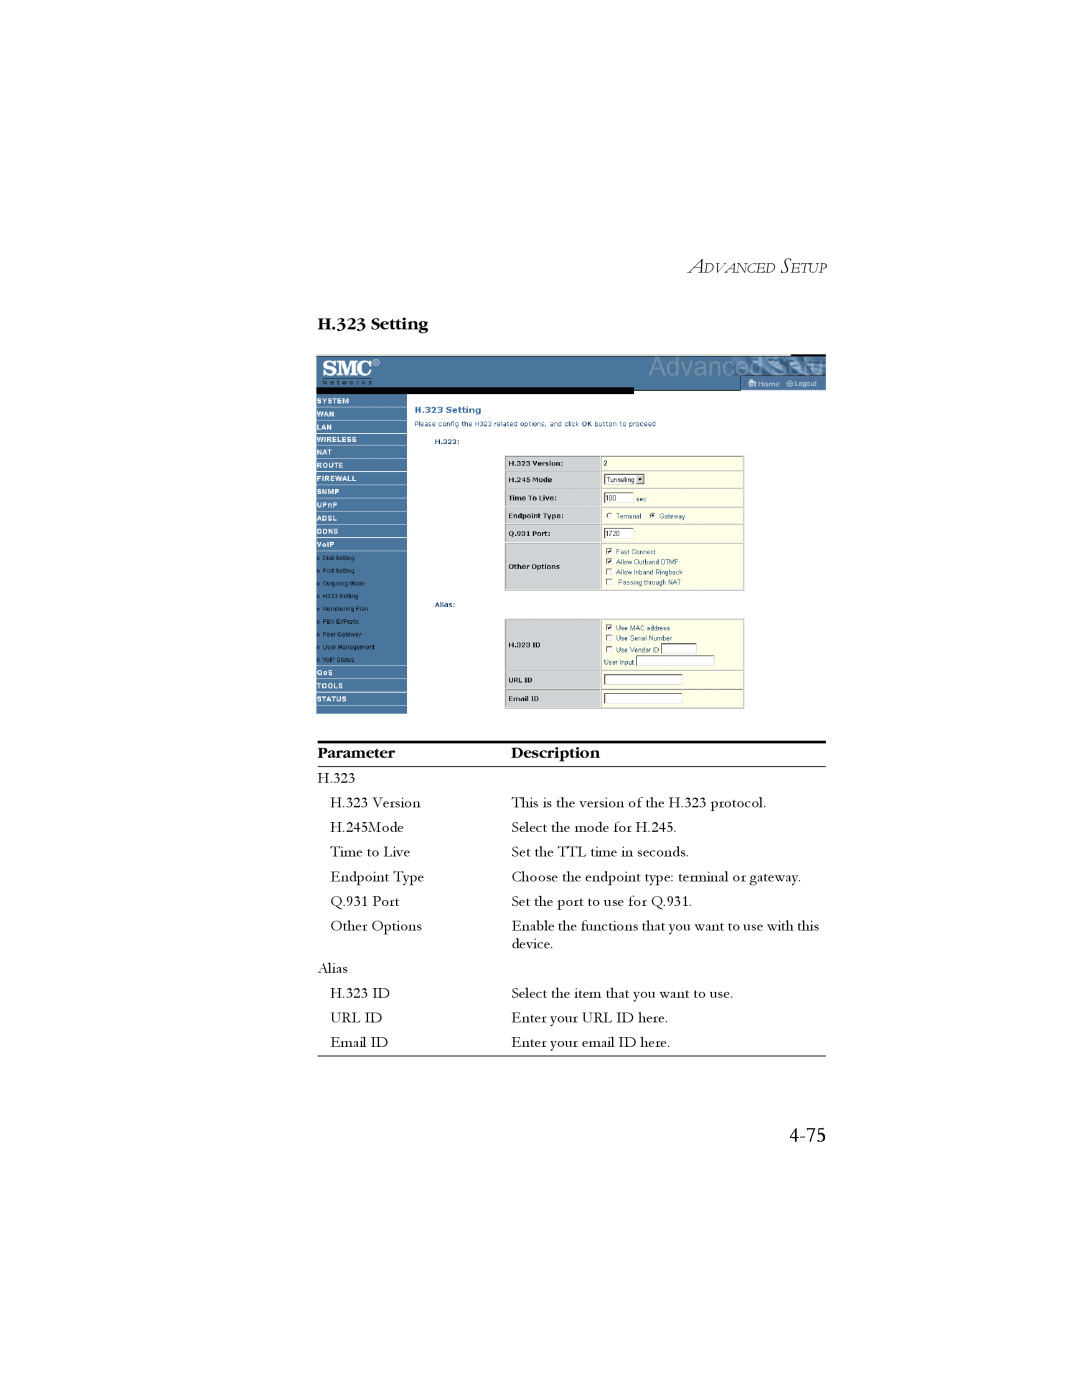 SMC Networks SMC7908VoWBRA manual 4-75, H.323 Setting, Parameter, Description 